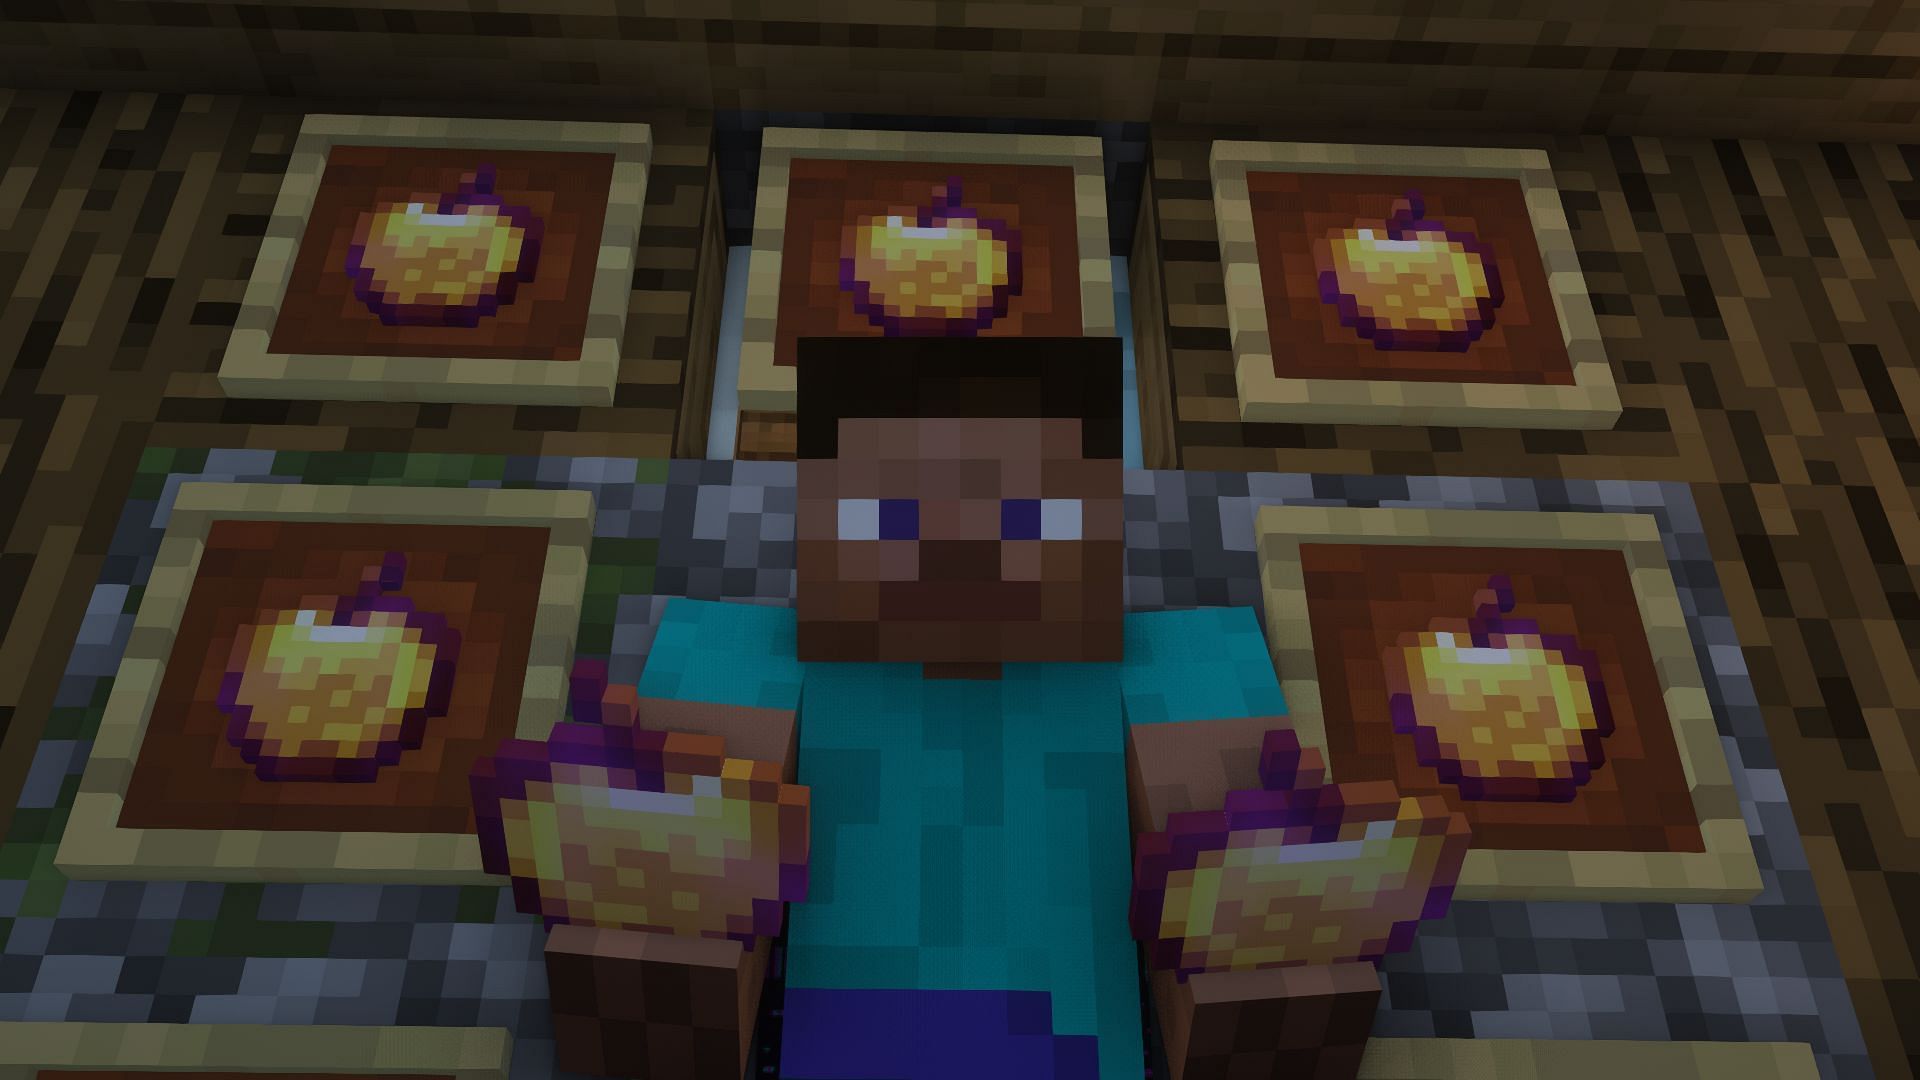 Steve with enchanted golden apples (Image via Mojang)